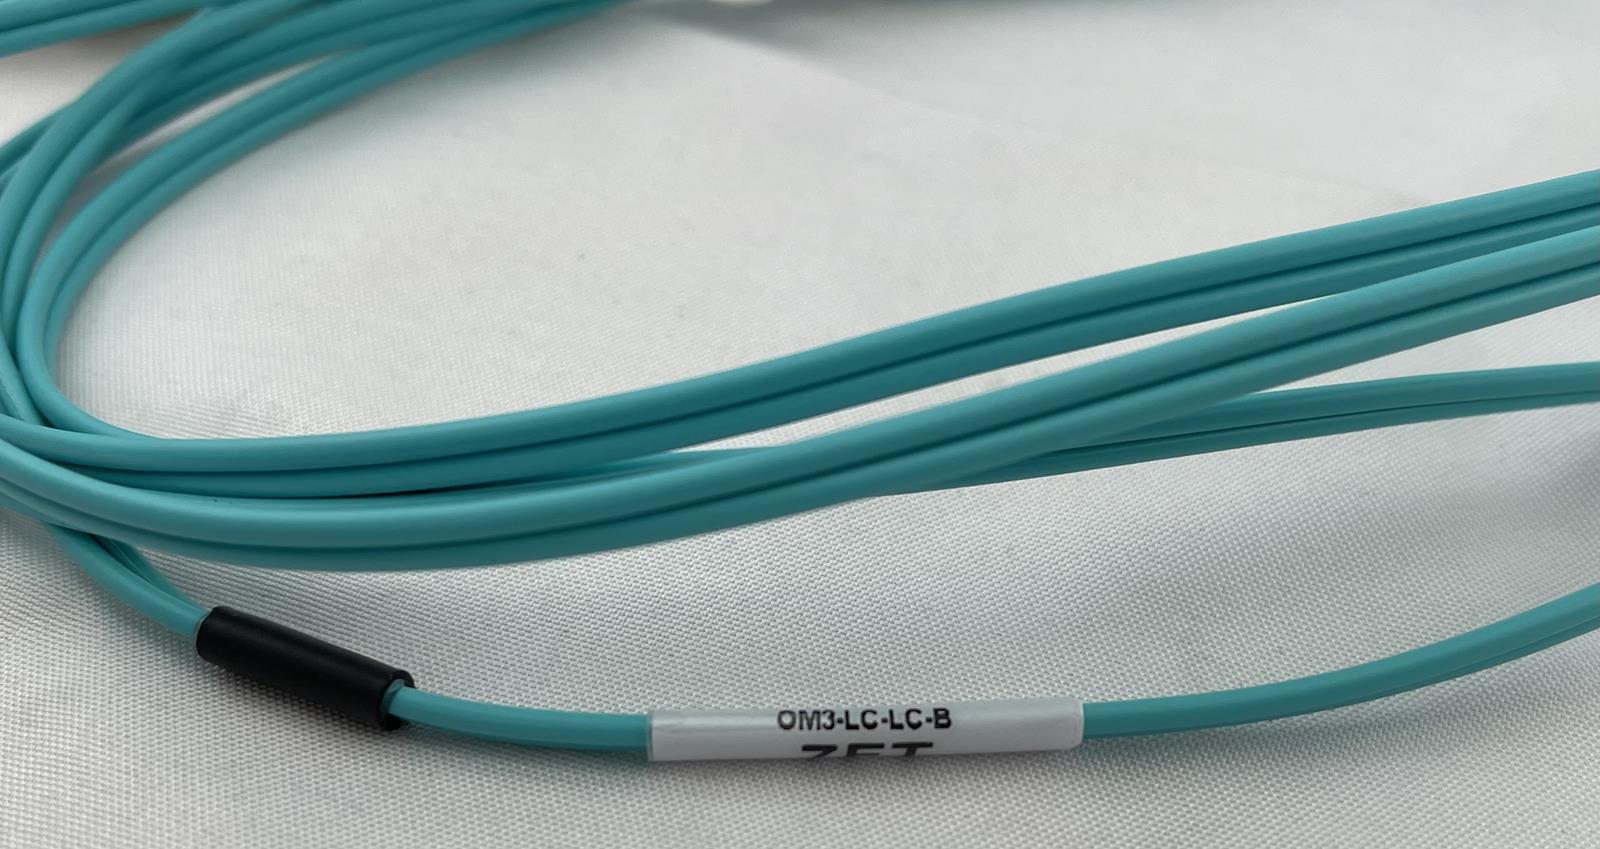 BUNDLE OF 10 - NETIG OM3-LC-LC-B-007 7FT Fiber Cables